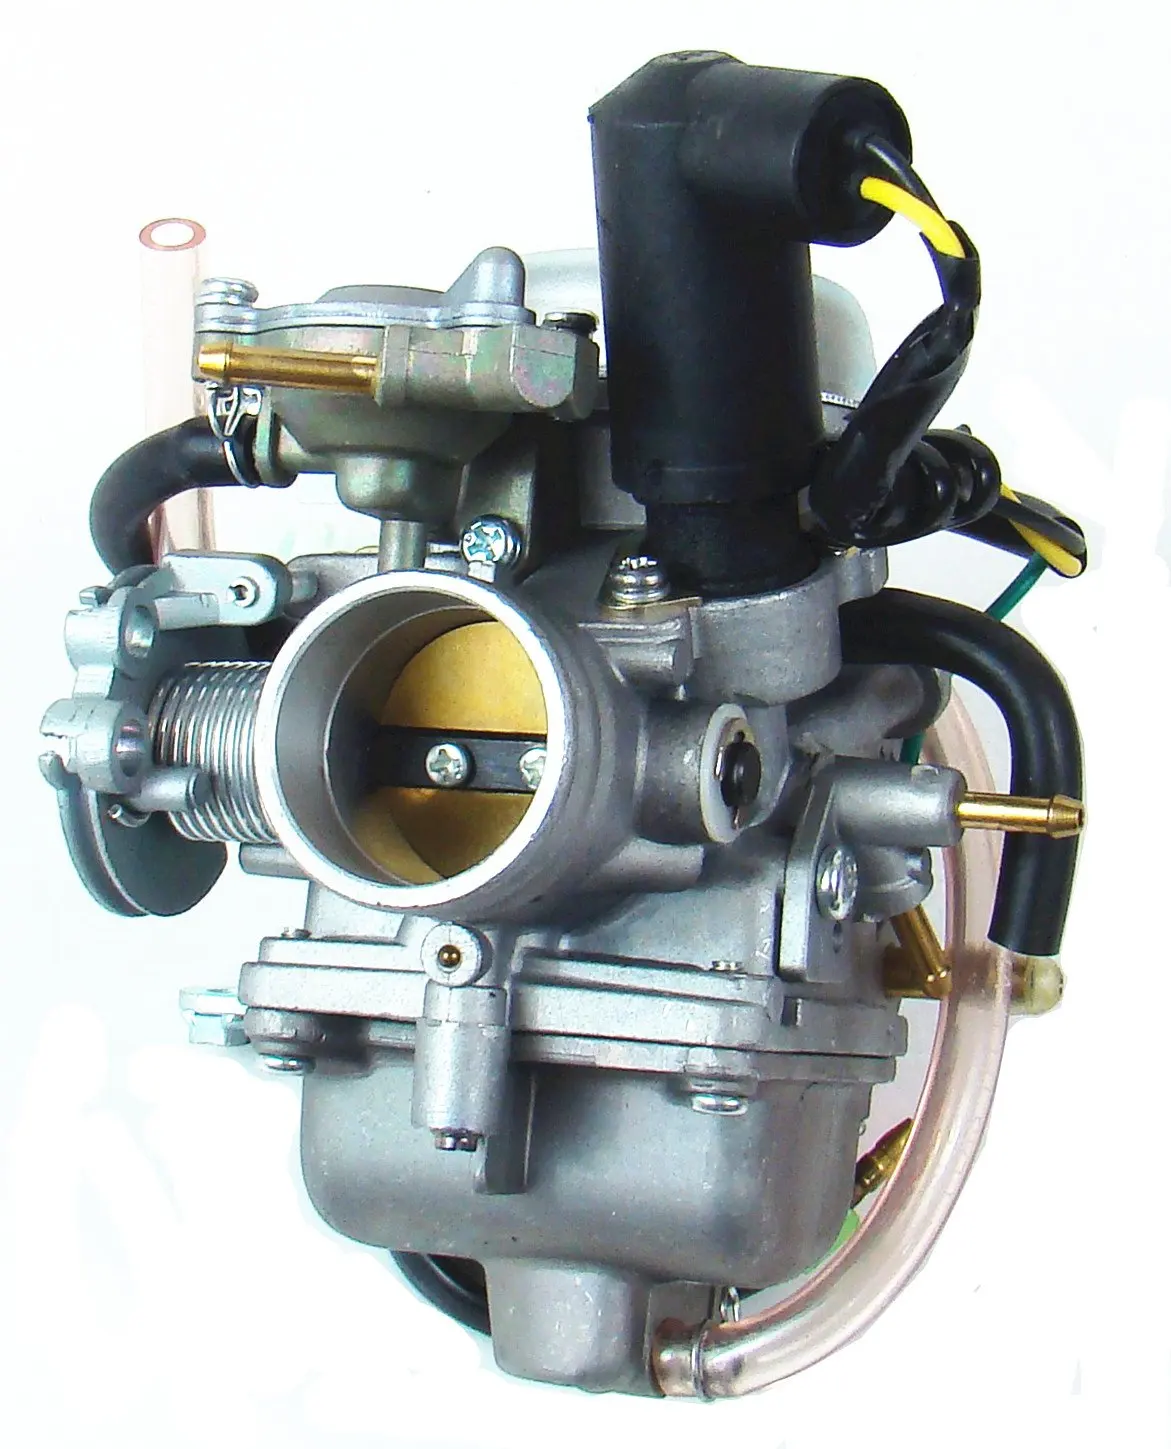 hammerhead 250 carburetor